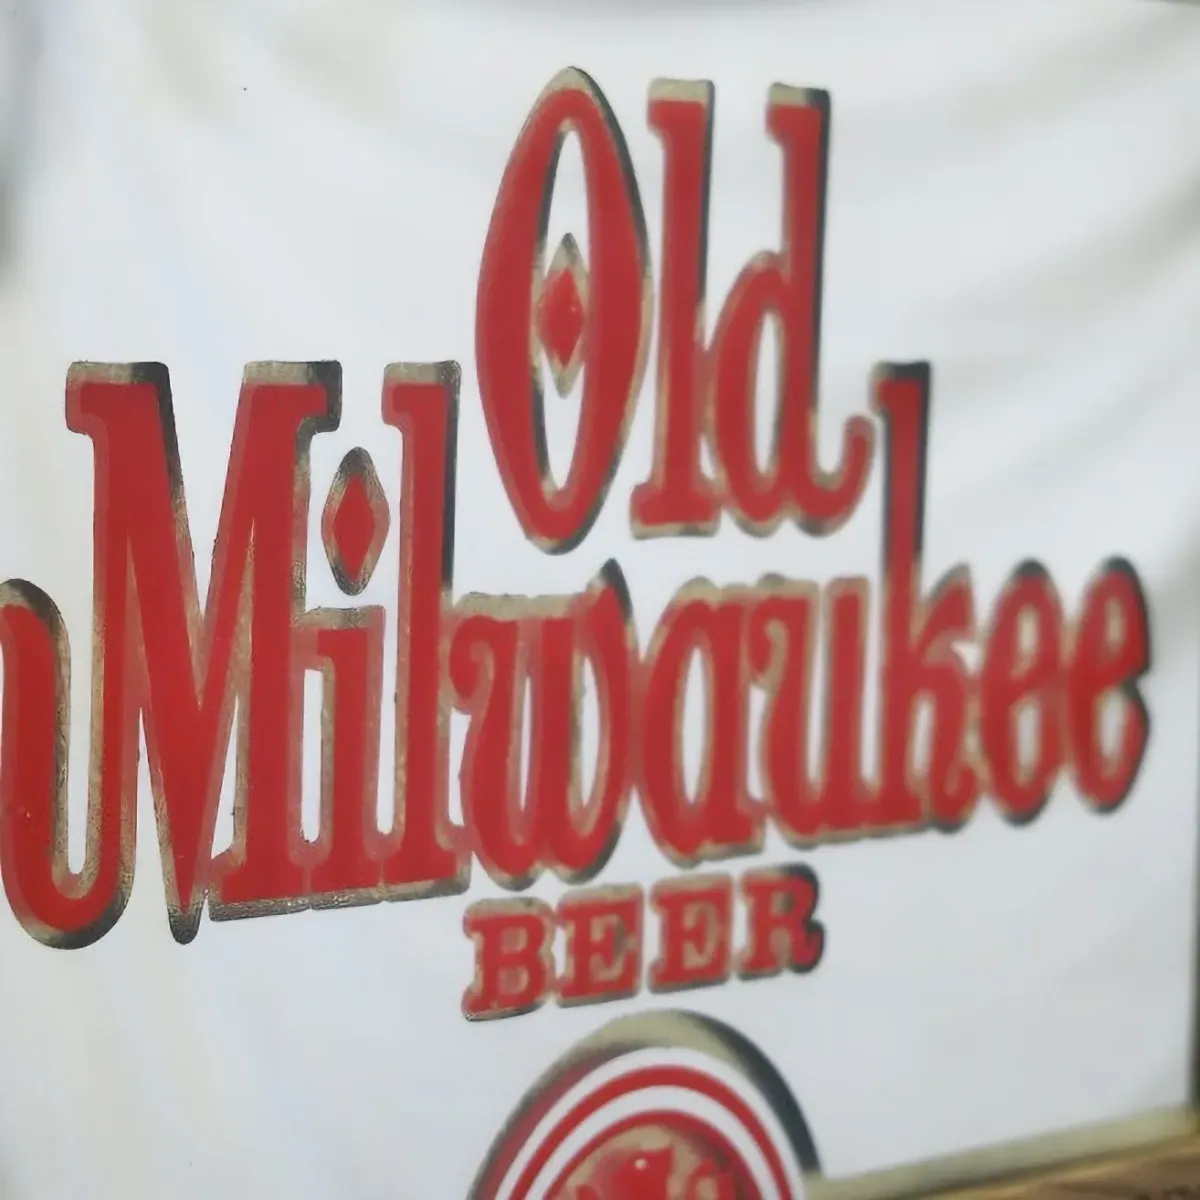 Old Milwaukee BEER ビンテージ パブミラー